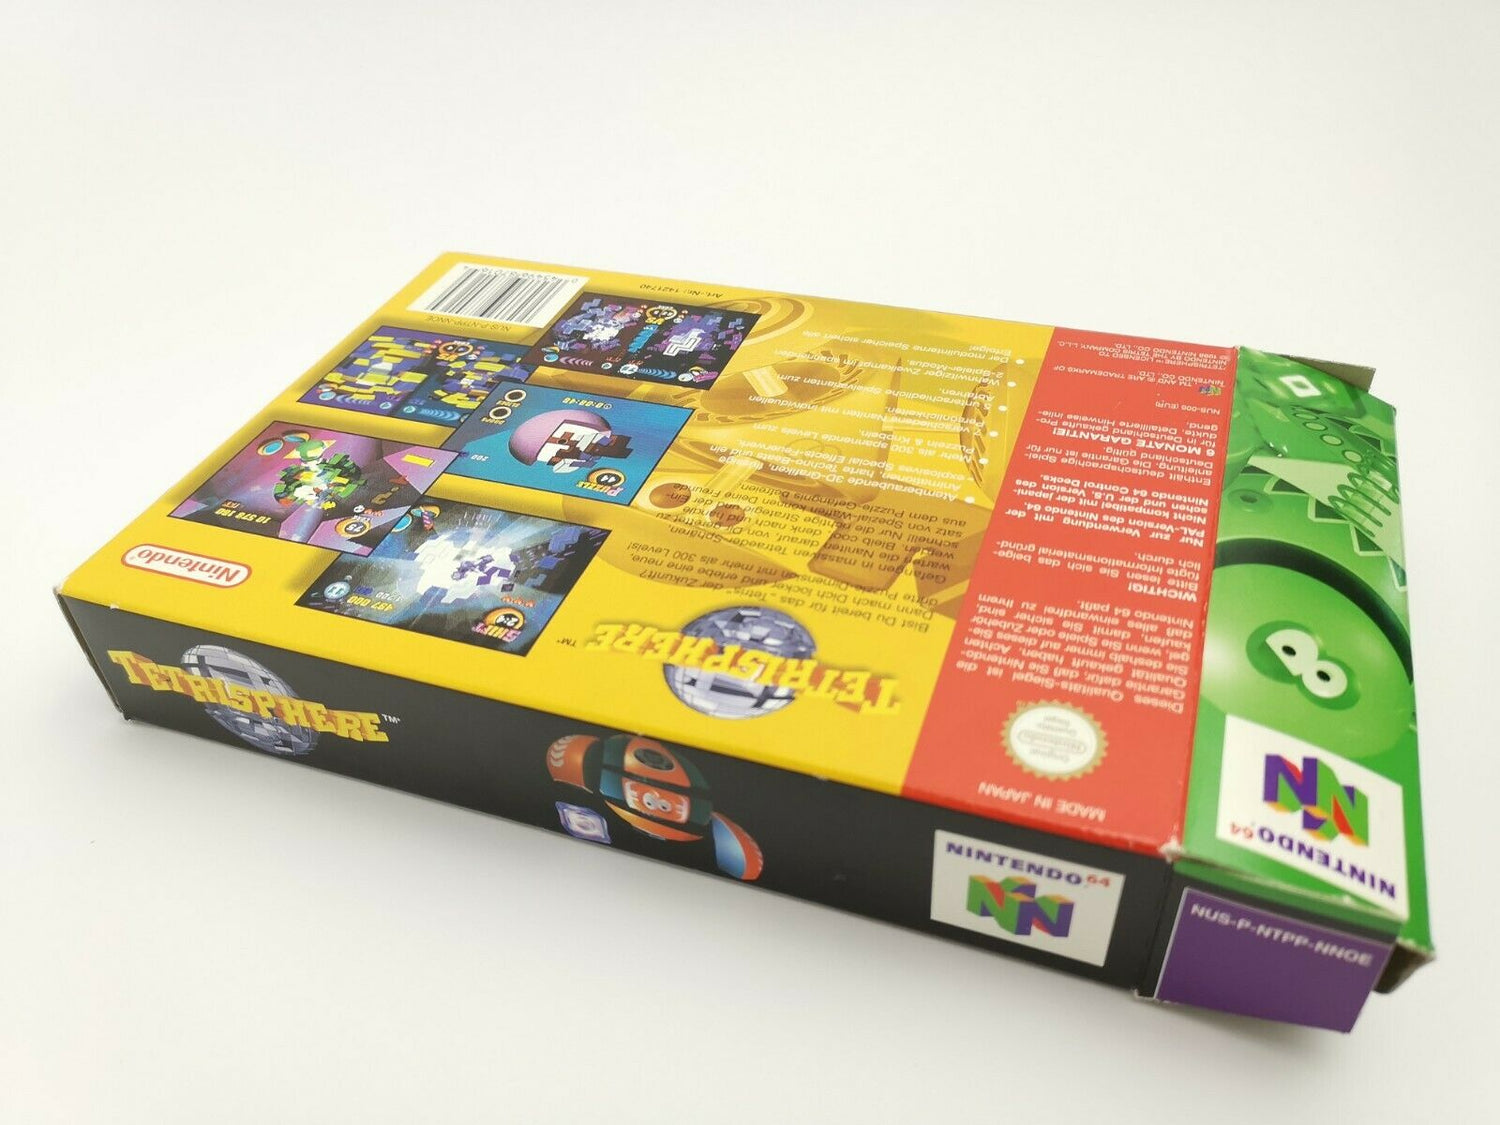 Nintendo 64 Spiel 